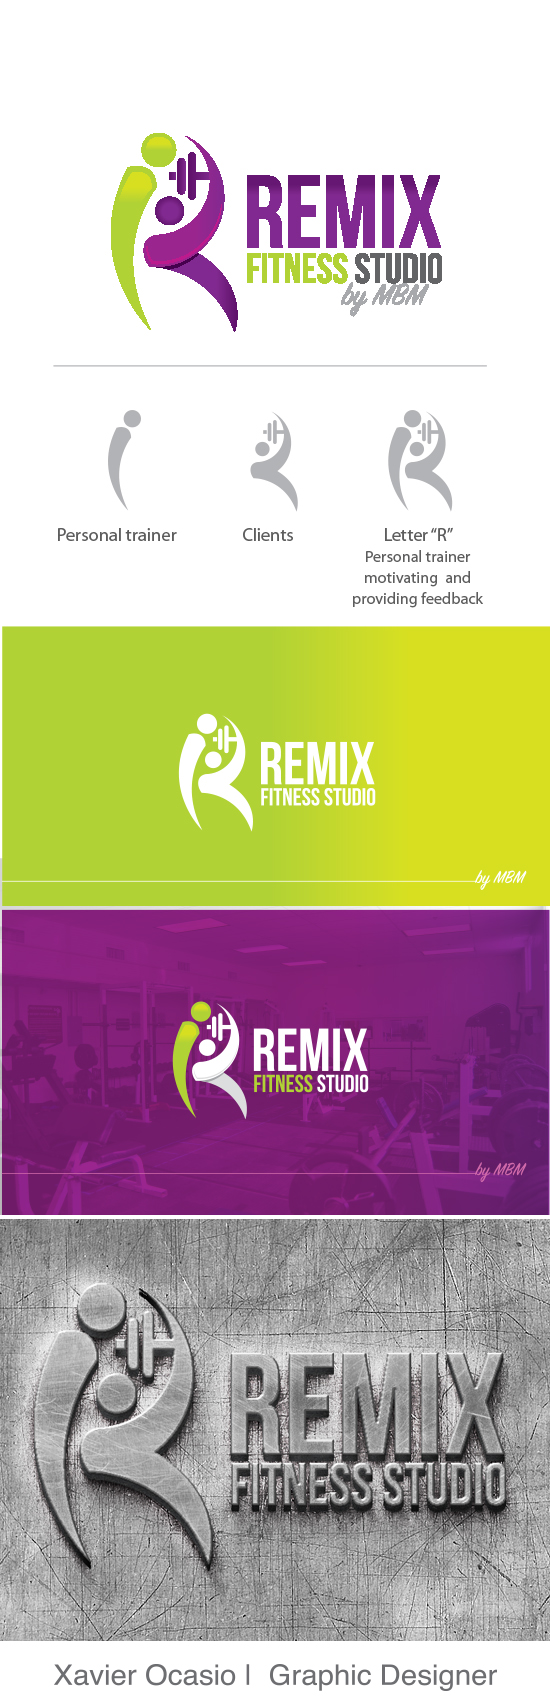 Logo Design for Remix Fitness Studio - Xavier Ocasio Freelance Graphic ...